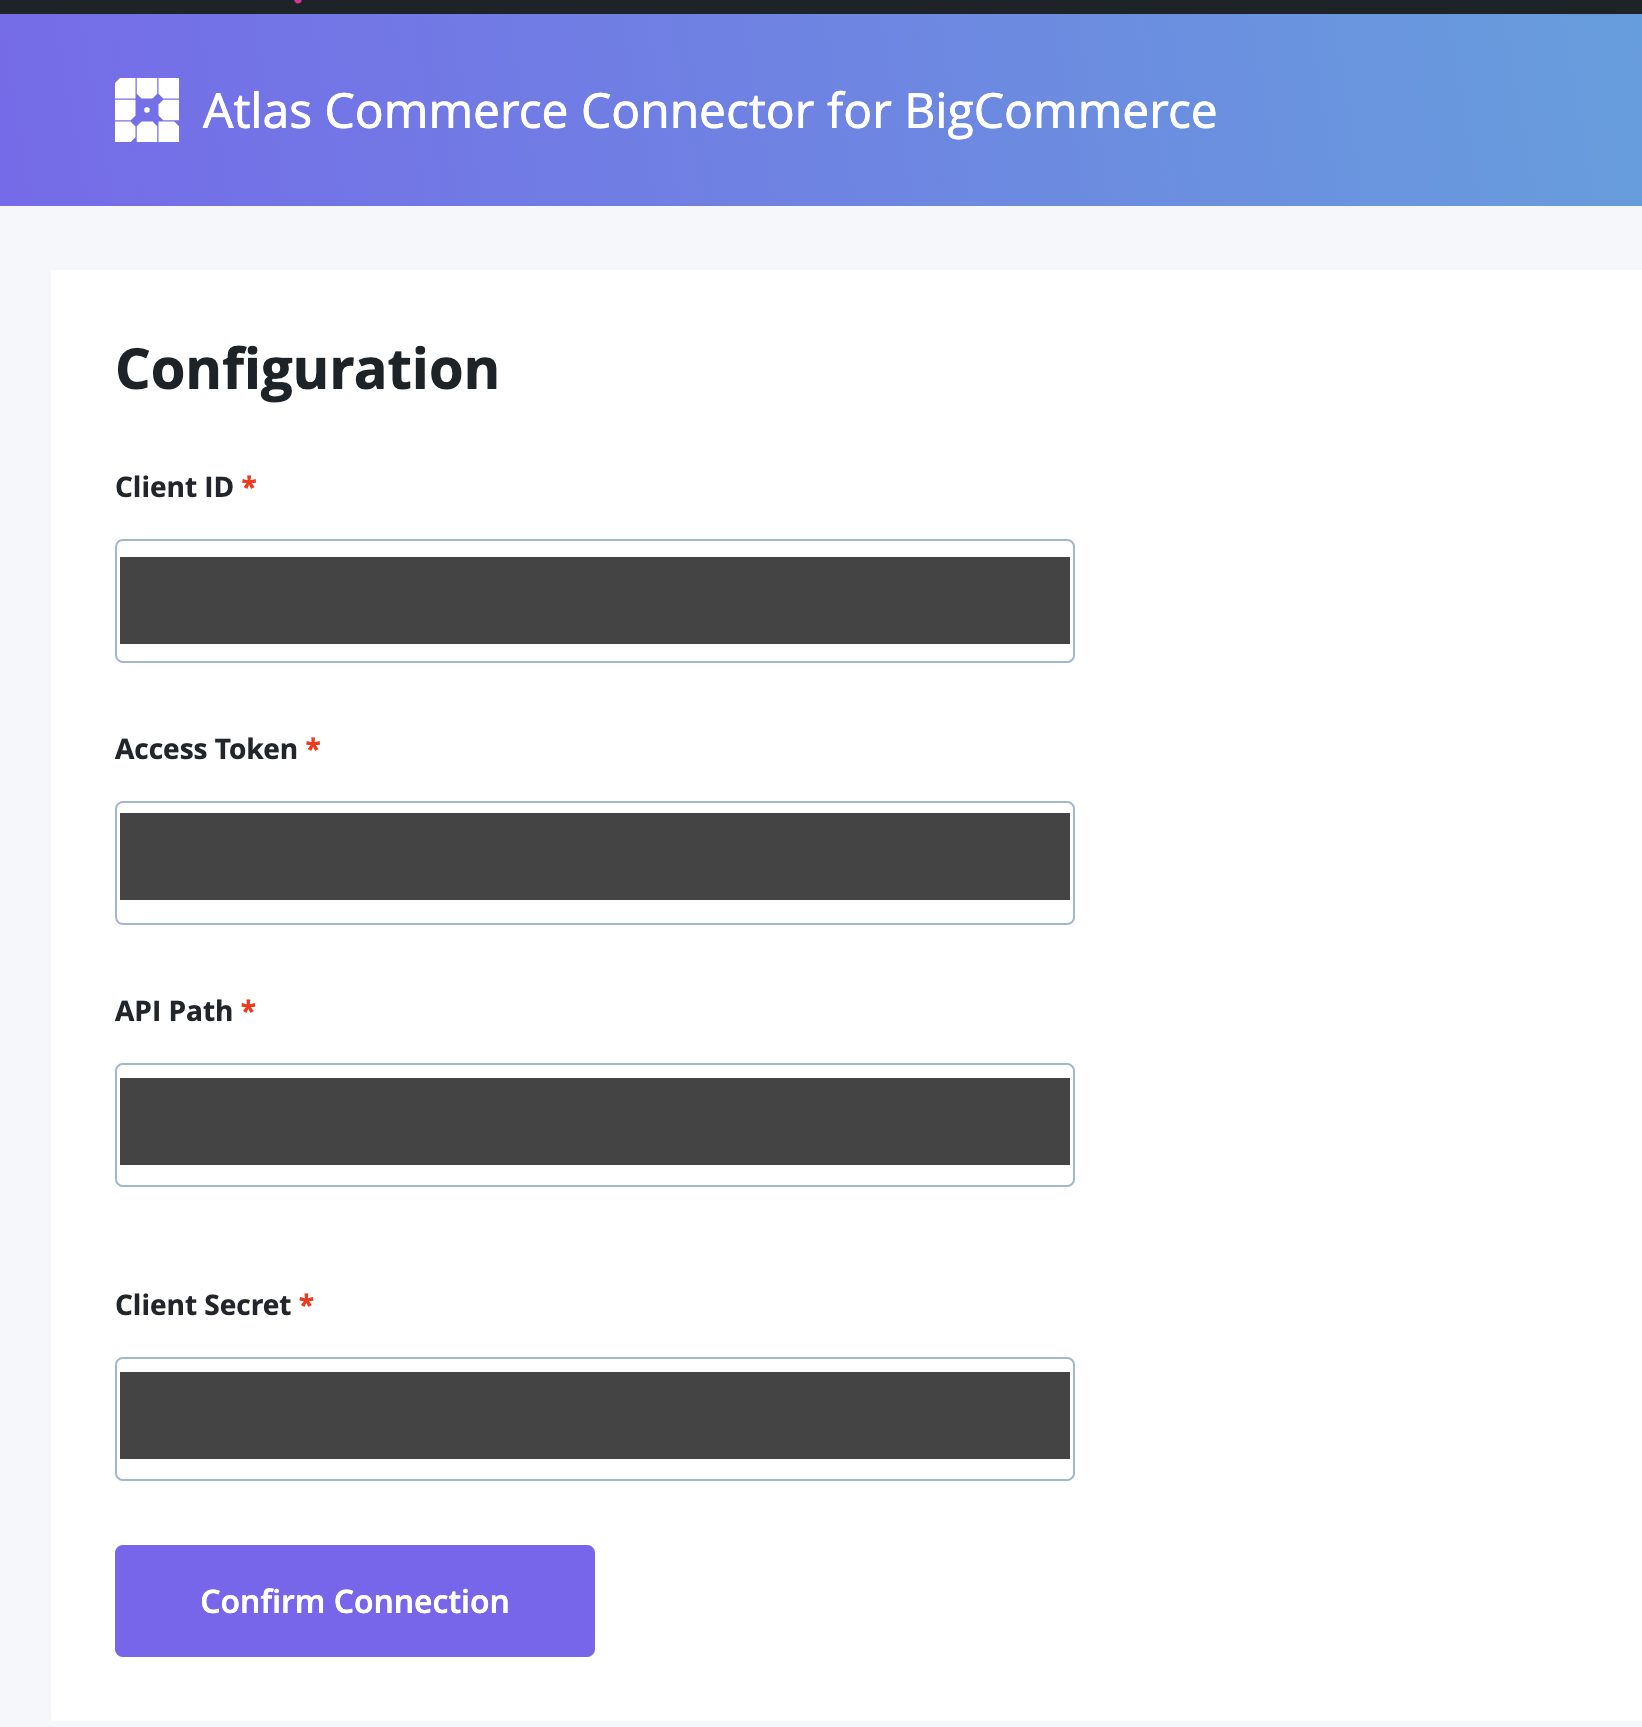 Atlas Commerce Connector Configuration